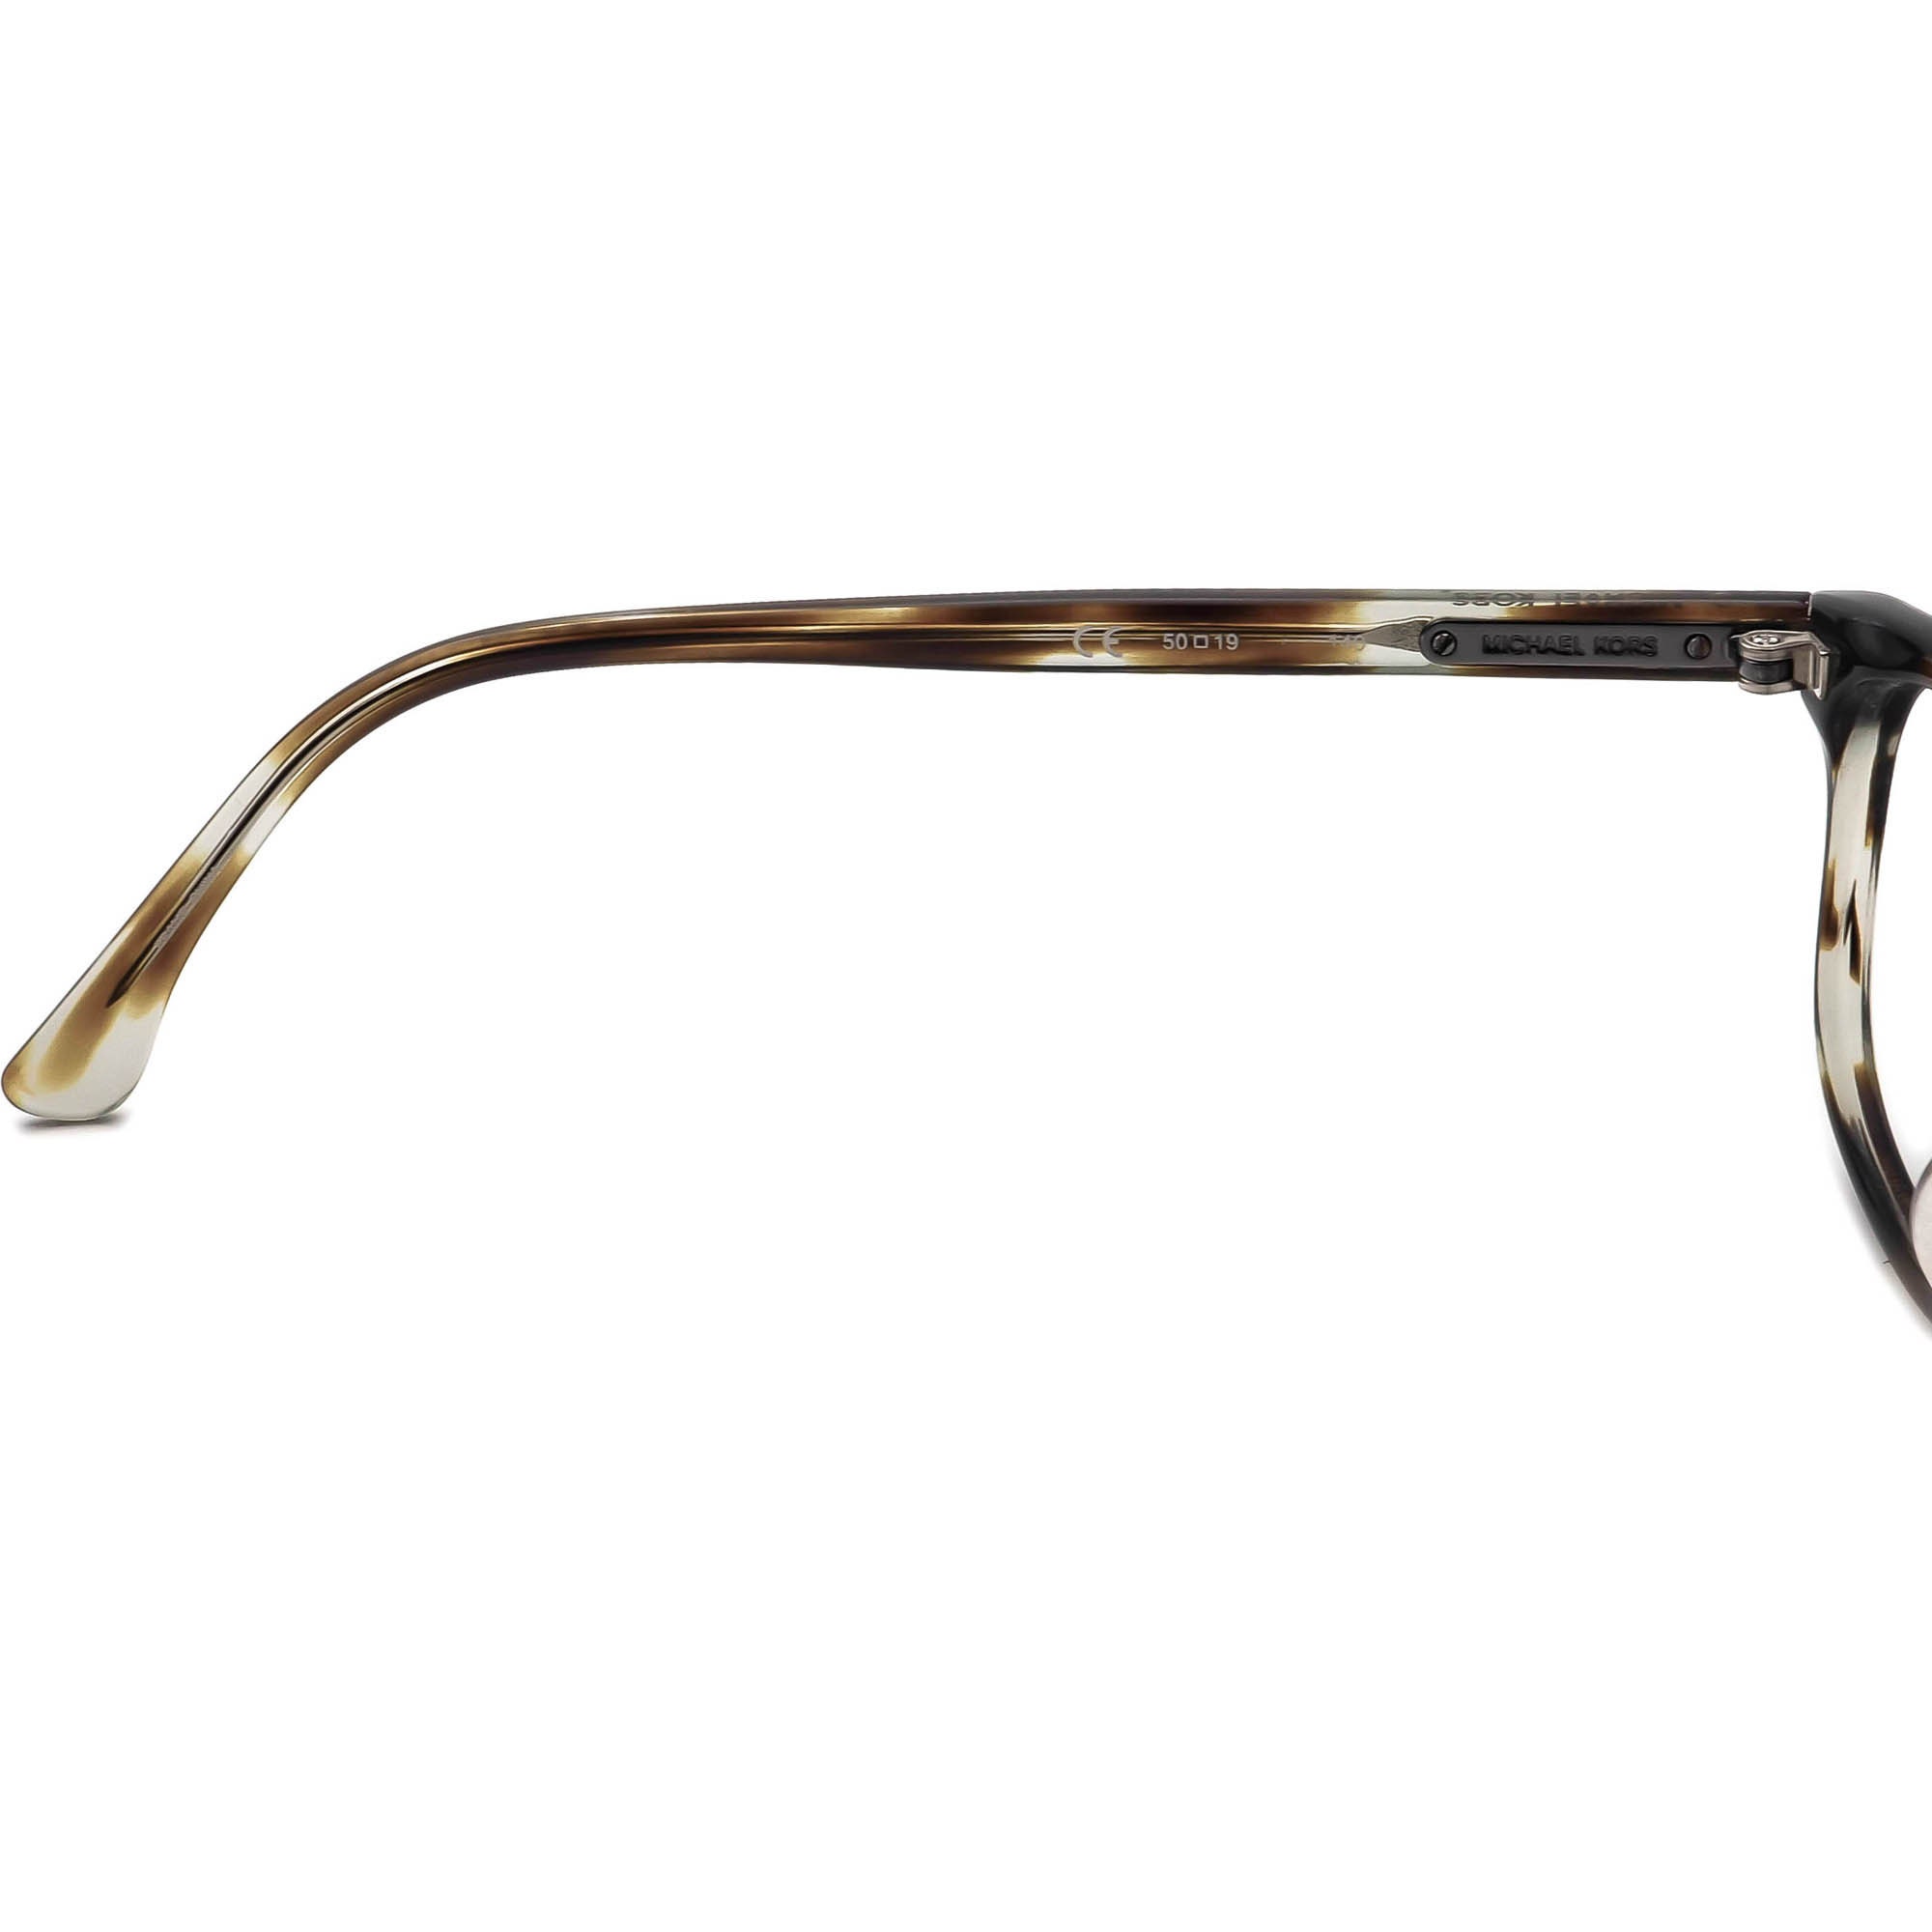 Michael Kors Bril MK285 075 Olijfschildpad Rechthoekig Frame 50 19 140 Accessoires Zonnebrillen & Eyewear Brillen 